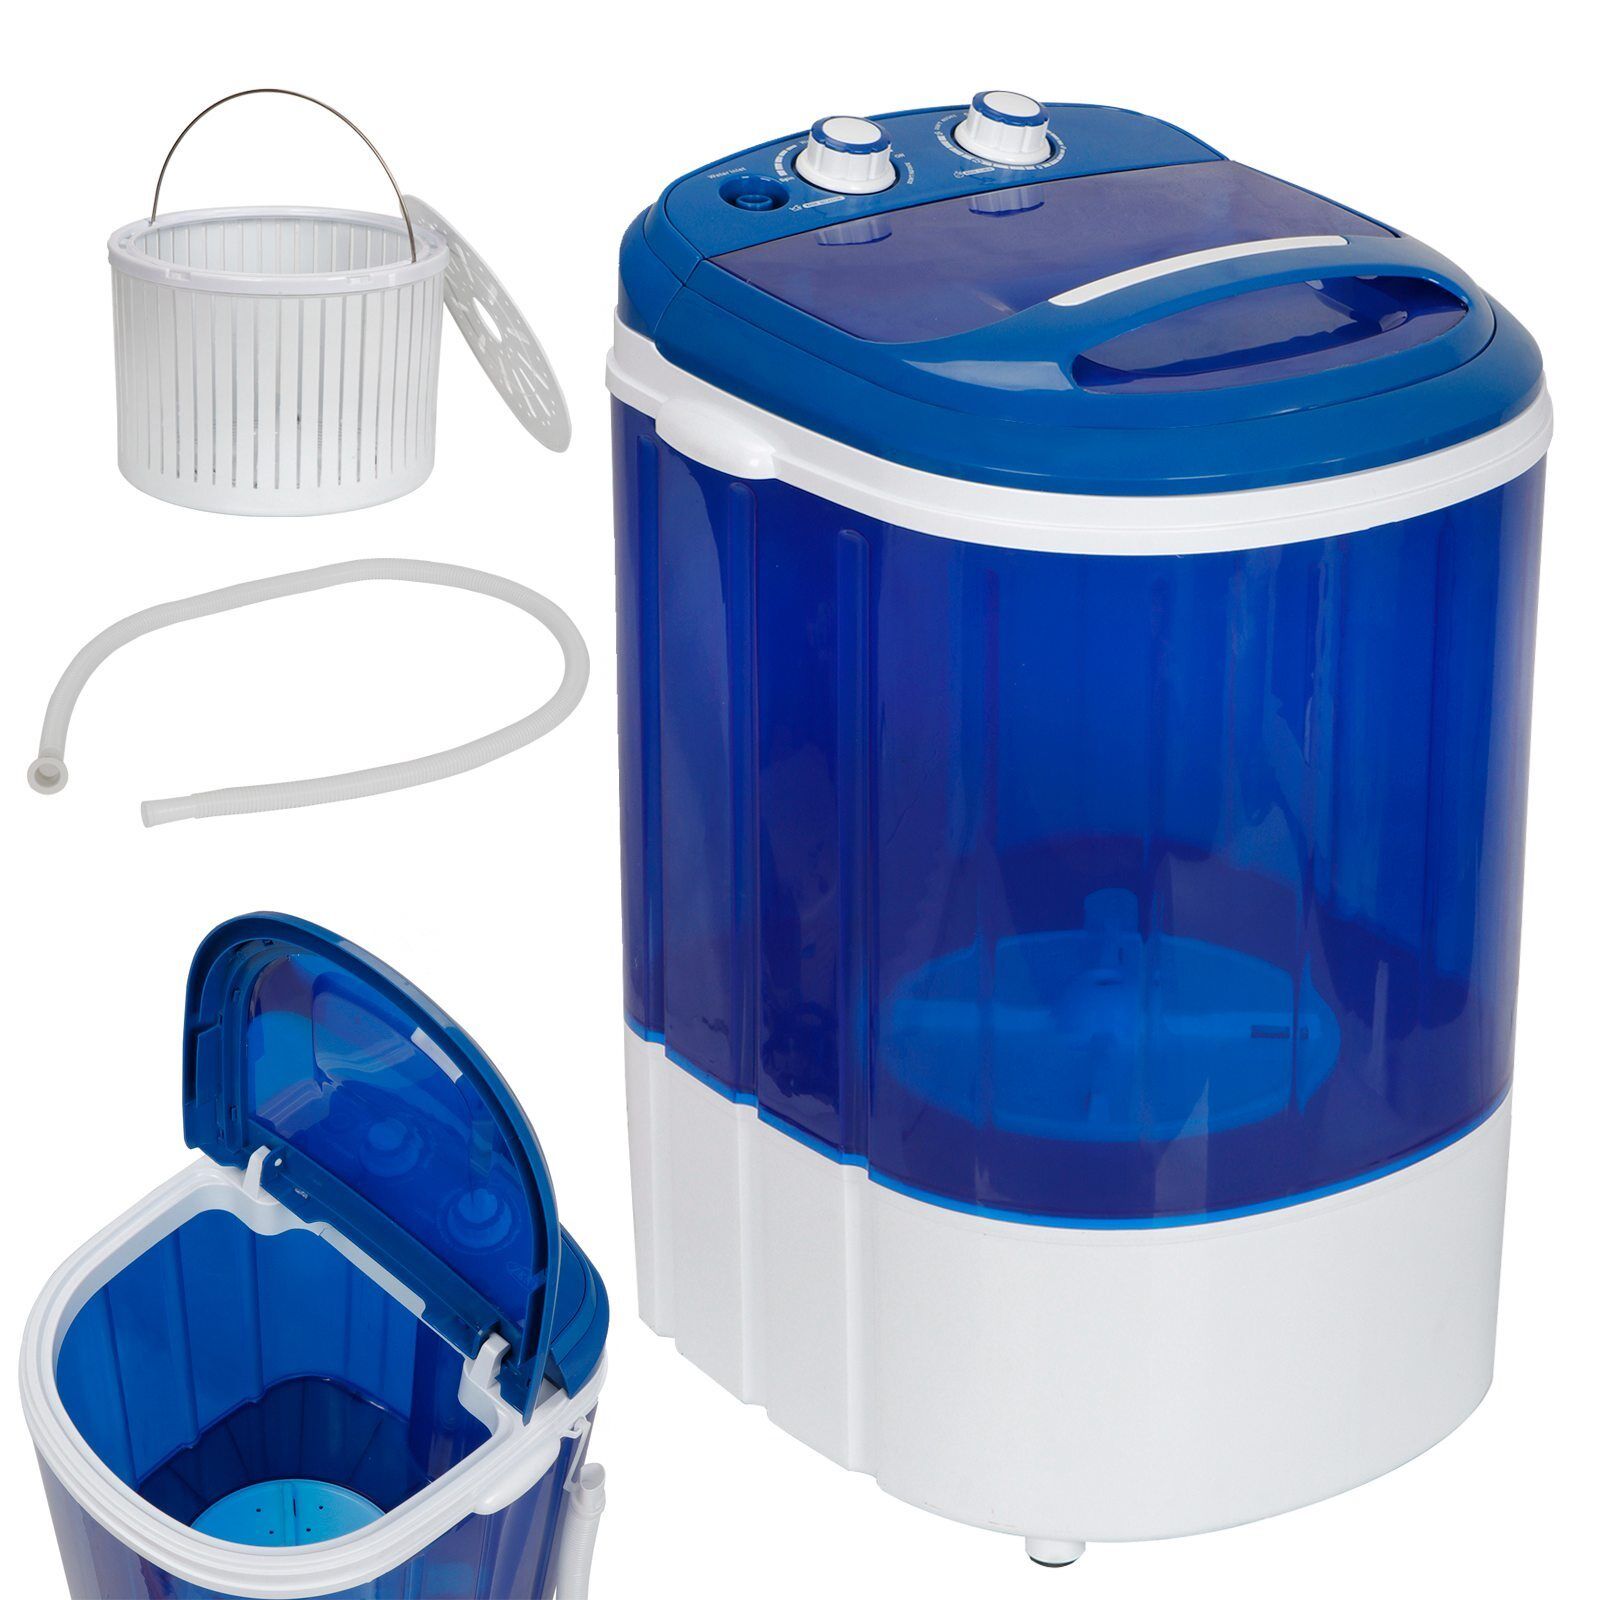 Portable Mini Laundry Washer 9lbs Compact Washing Machine Idea Dorm Rooms